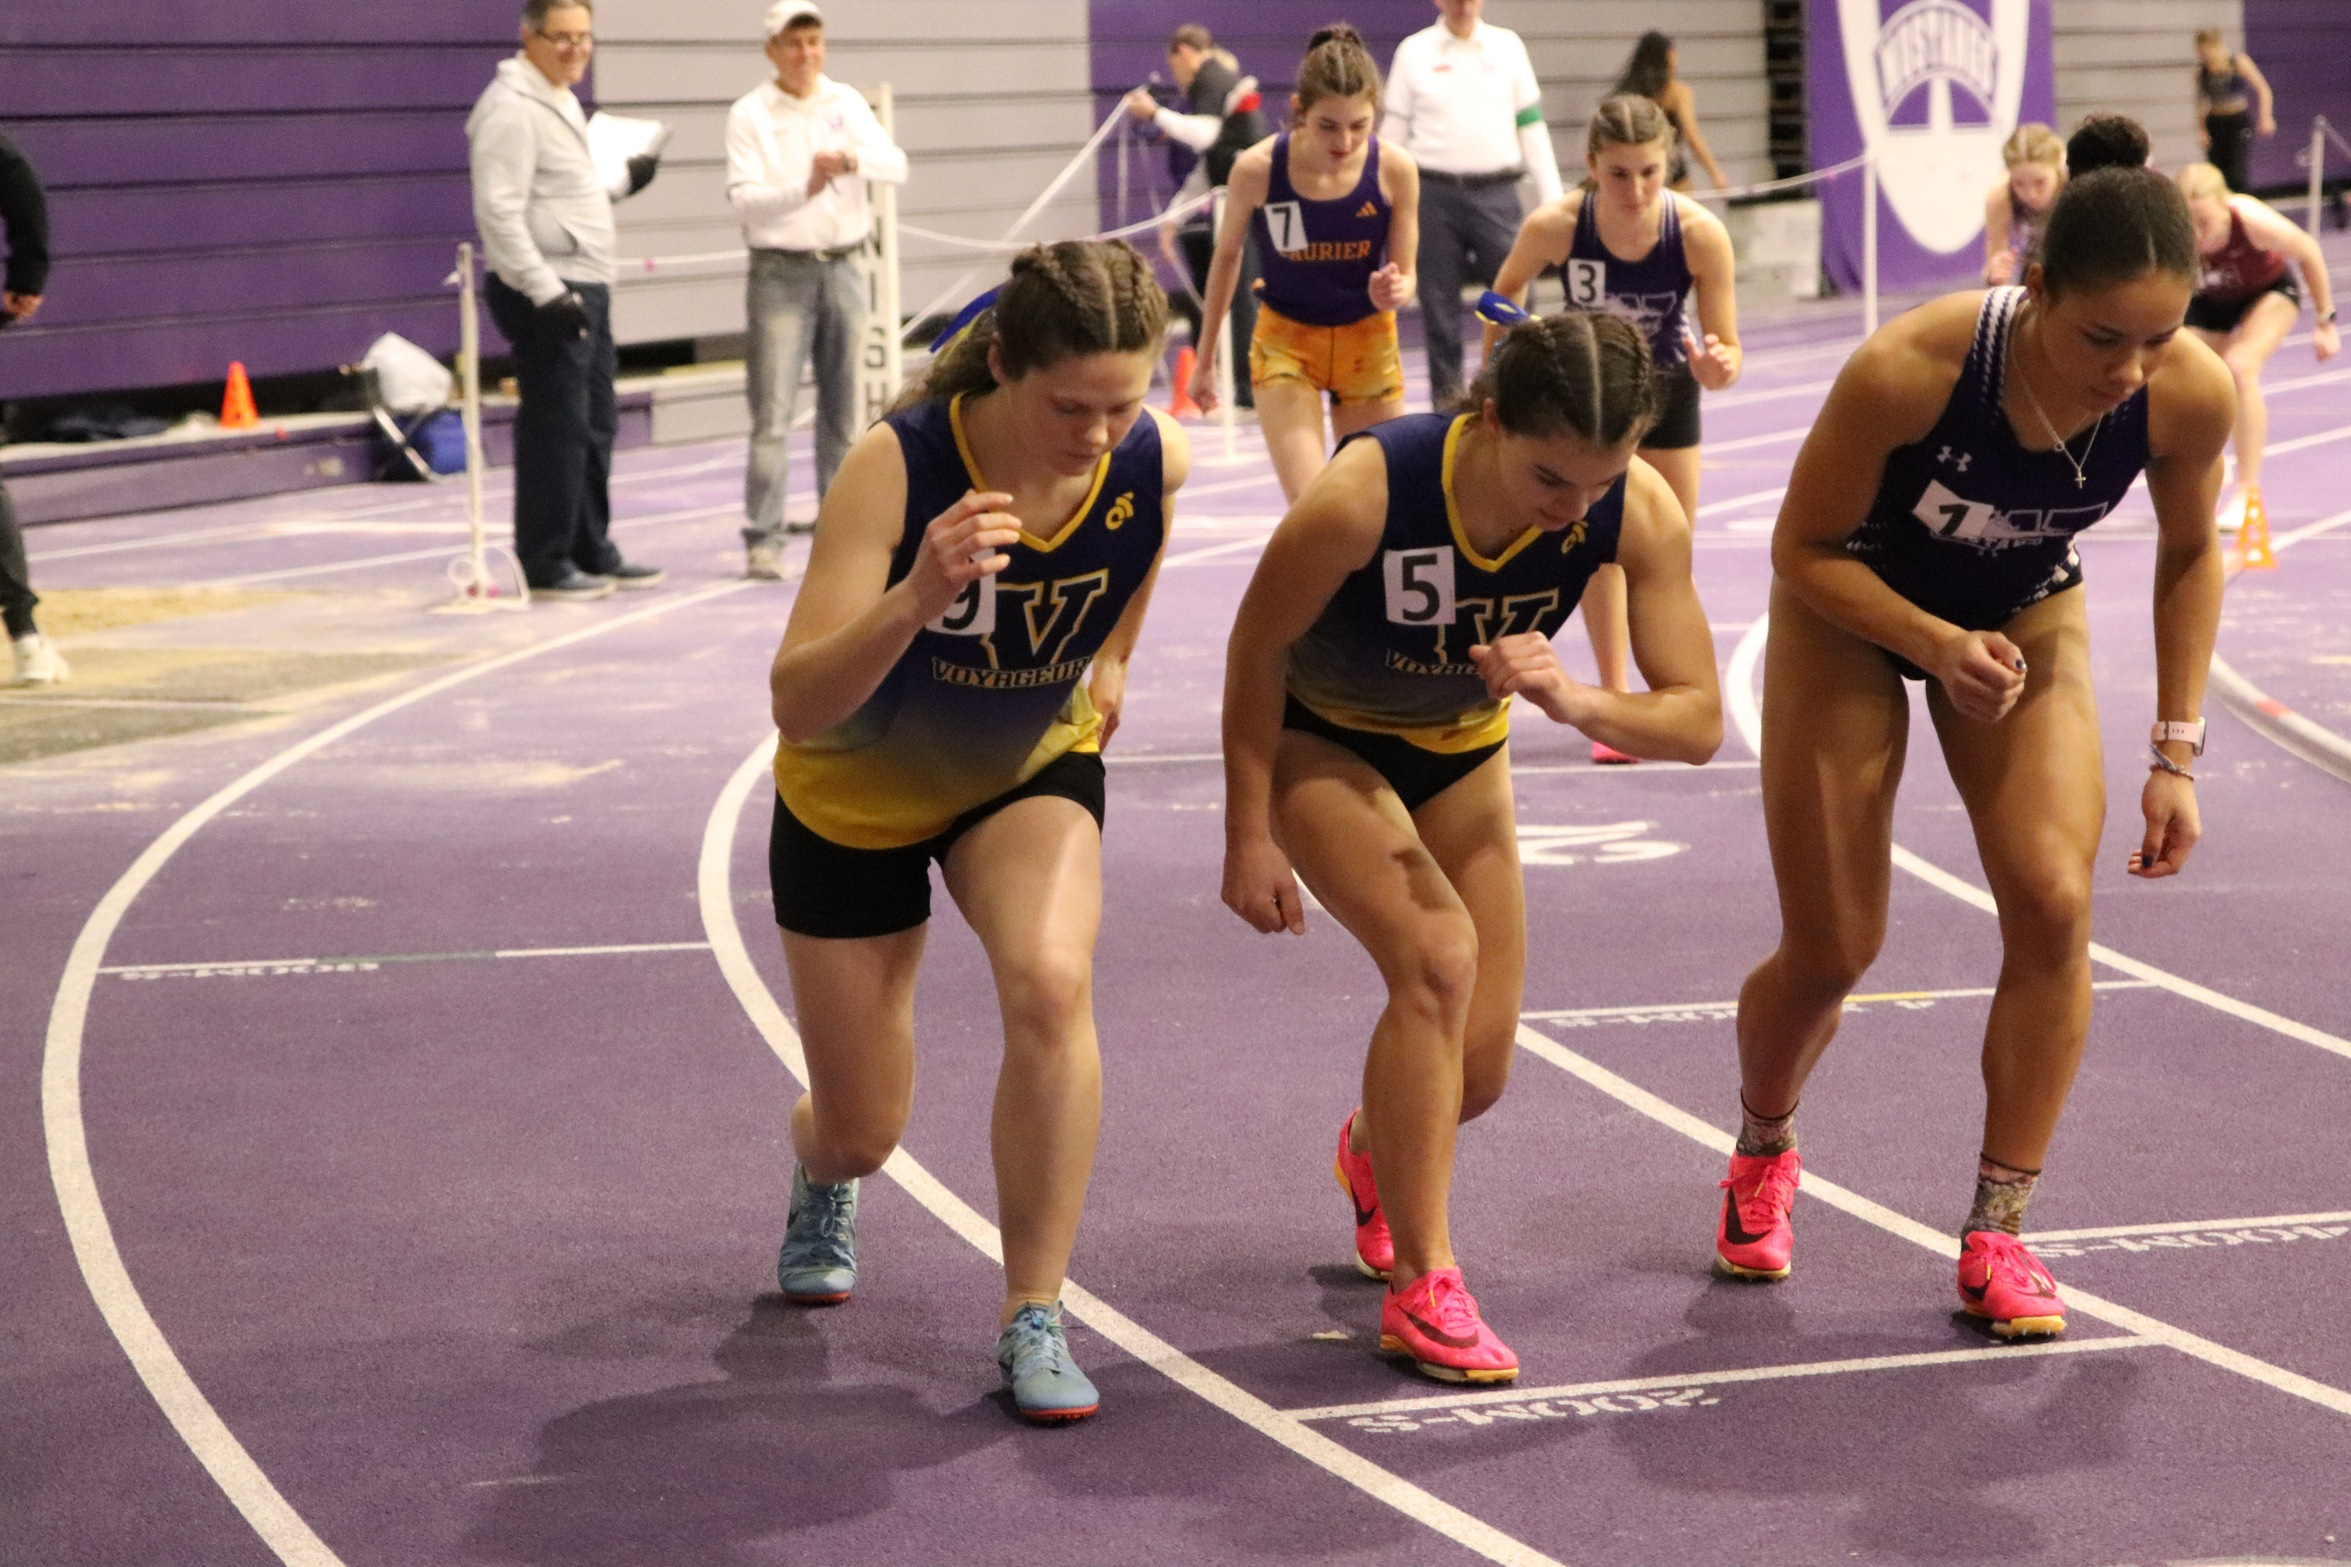 Sarah Booth and Kristen Mrozewski at the 1000 metre line - Abby Lanteigne